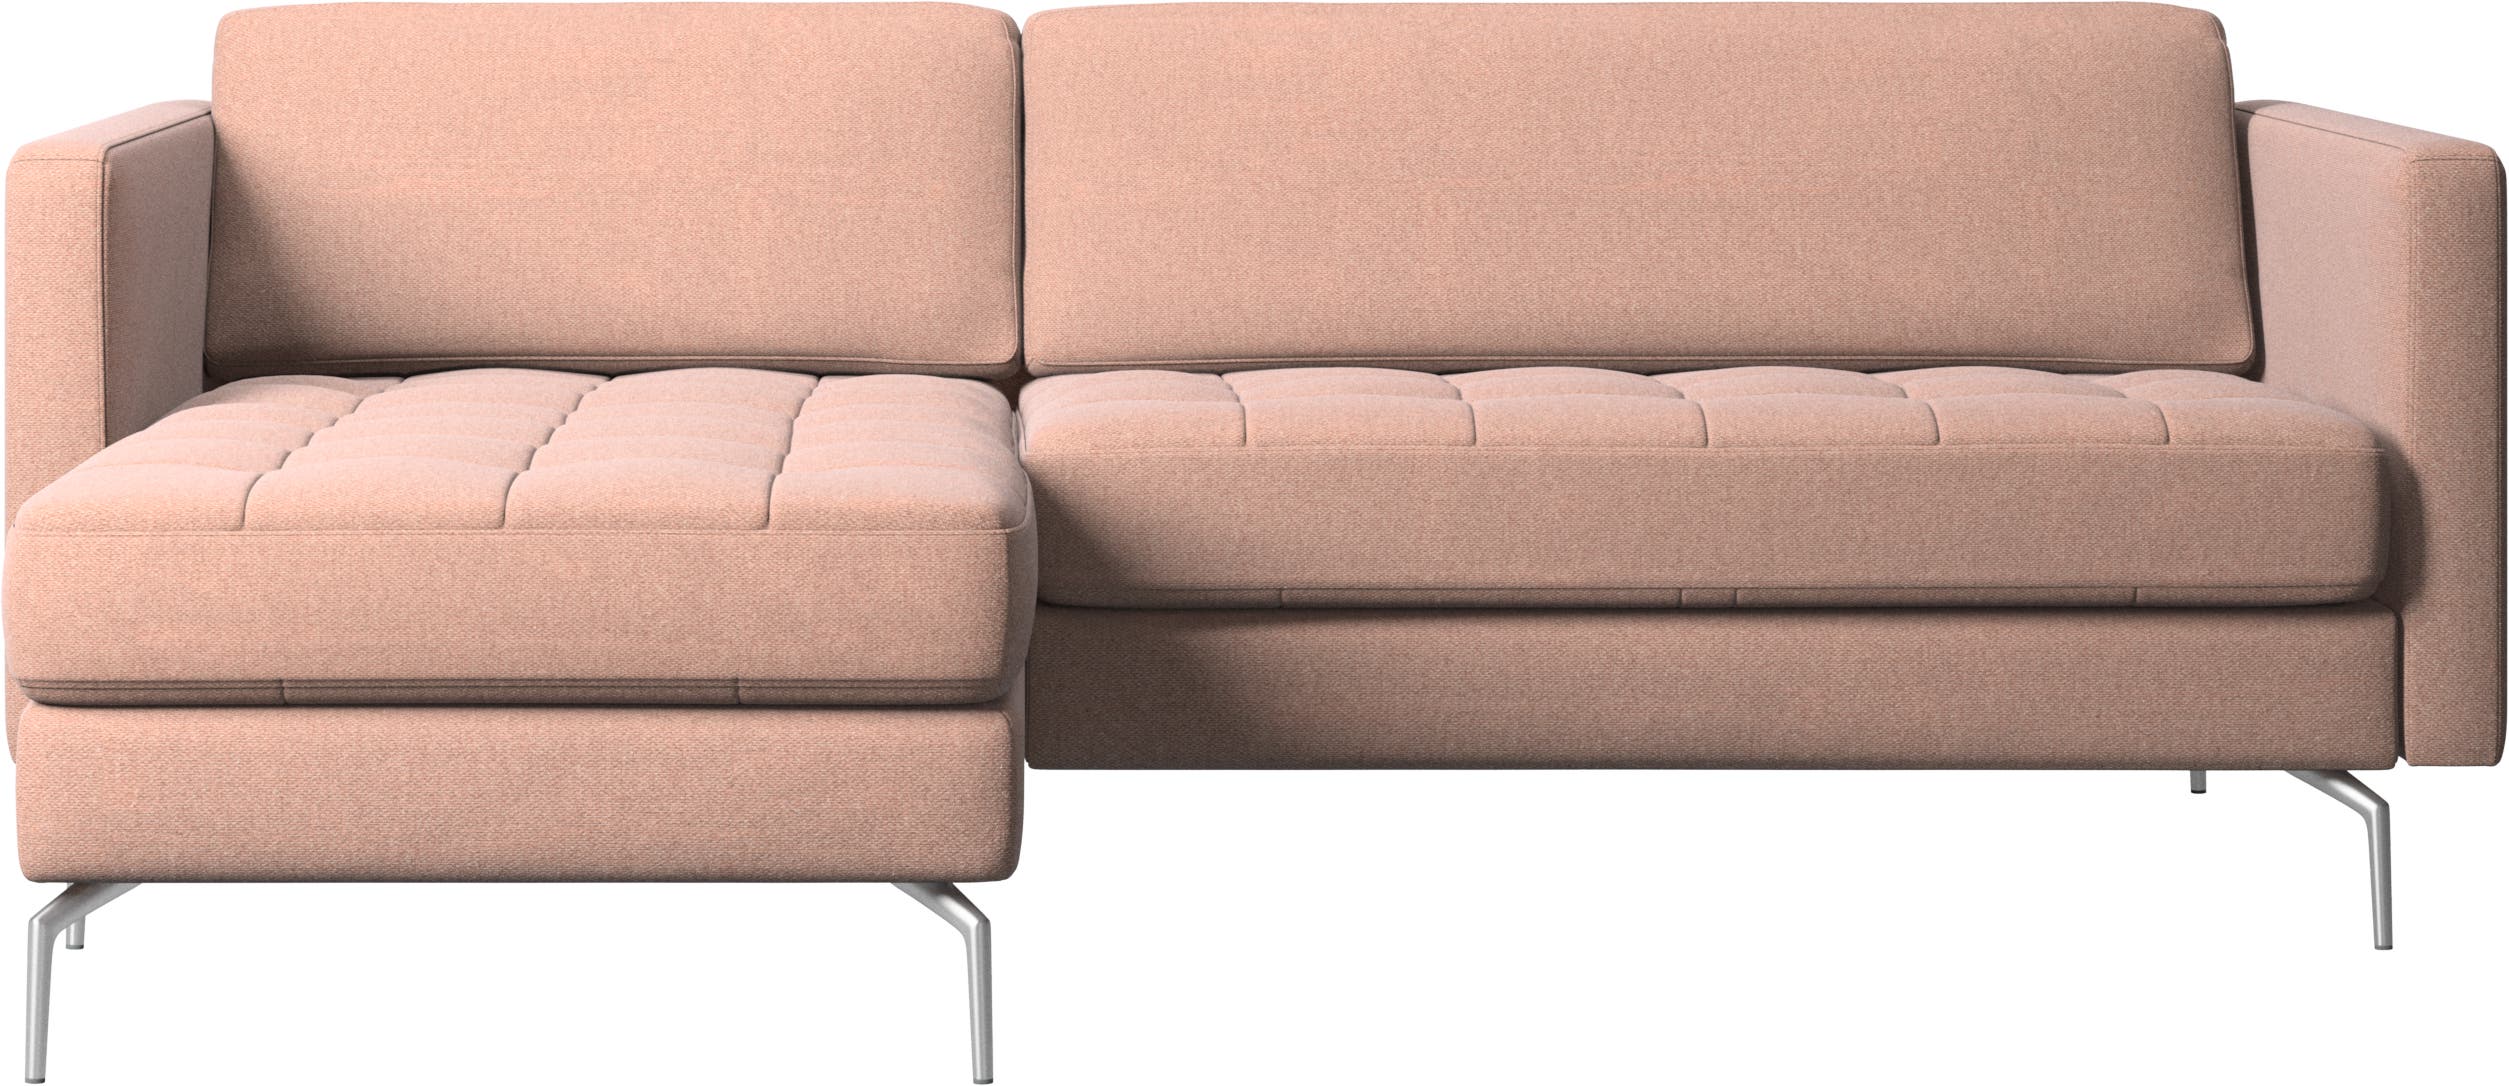 Osaka sofa med hvilemodul, tuftet sete